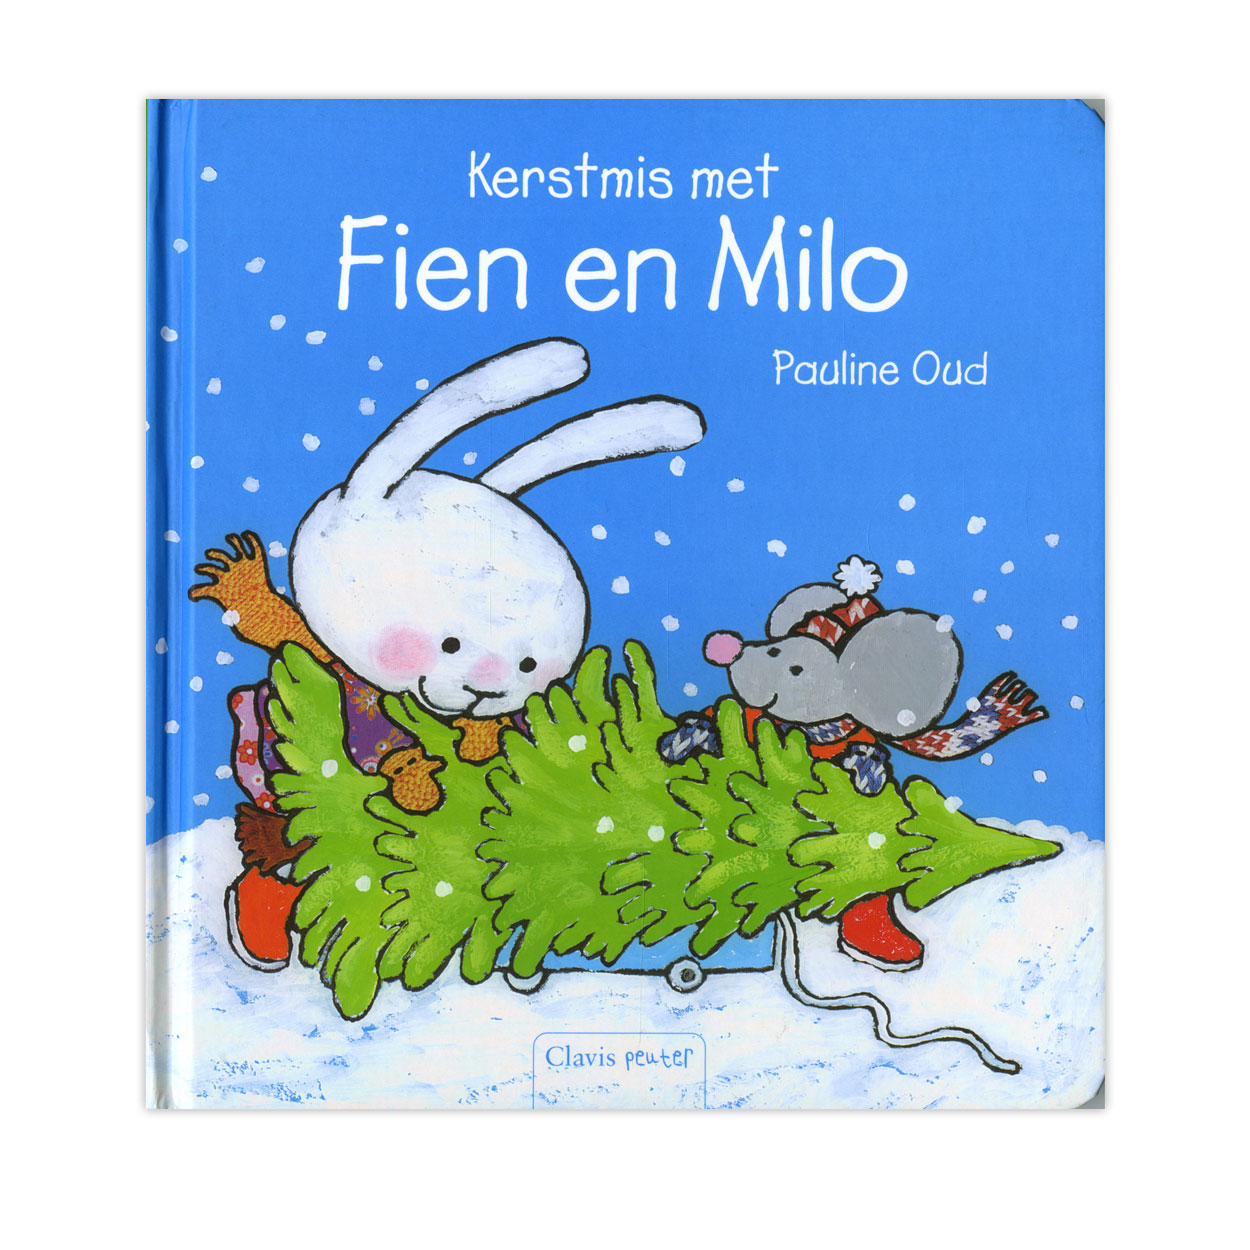 Kerstmis met Fien en Milo